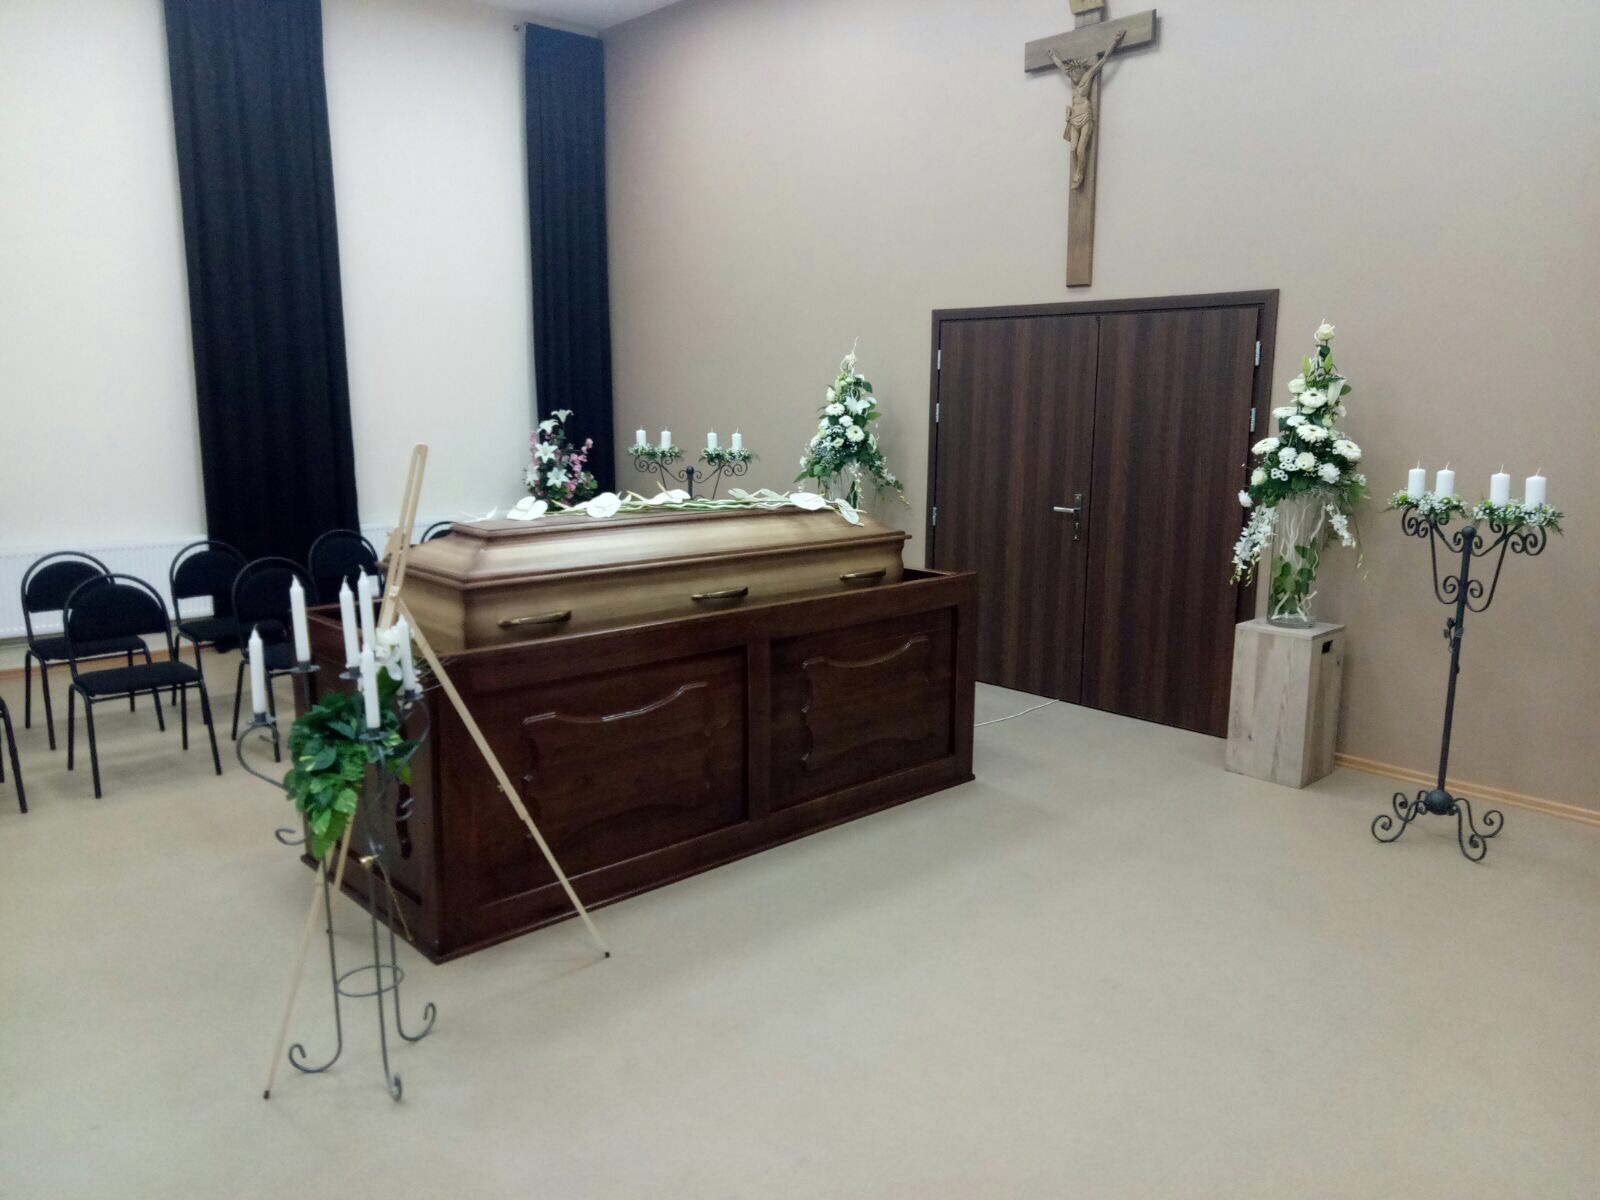 Похоронный дом - Крематорий. Зал для прощаний в Валмиере